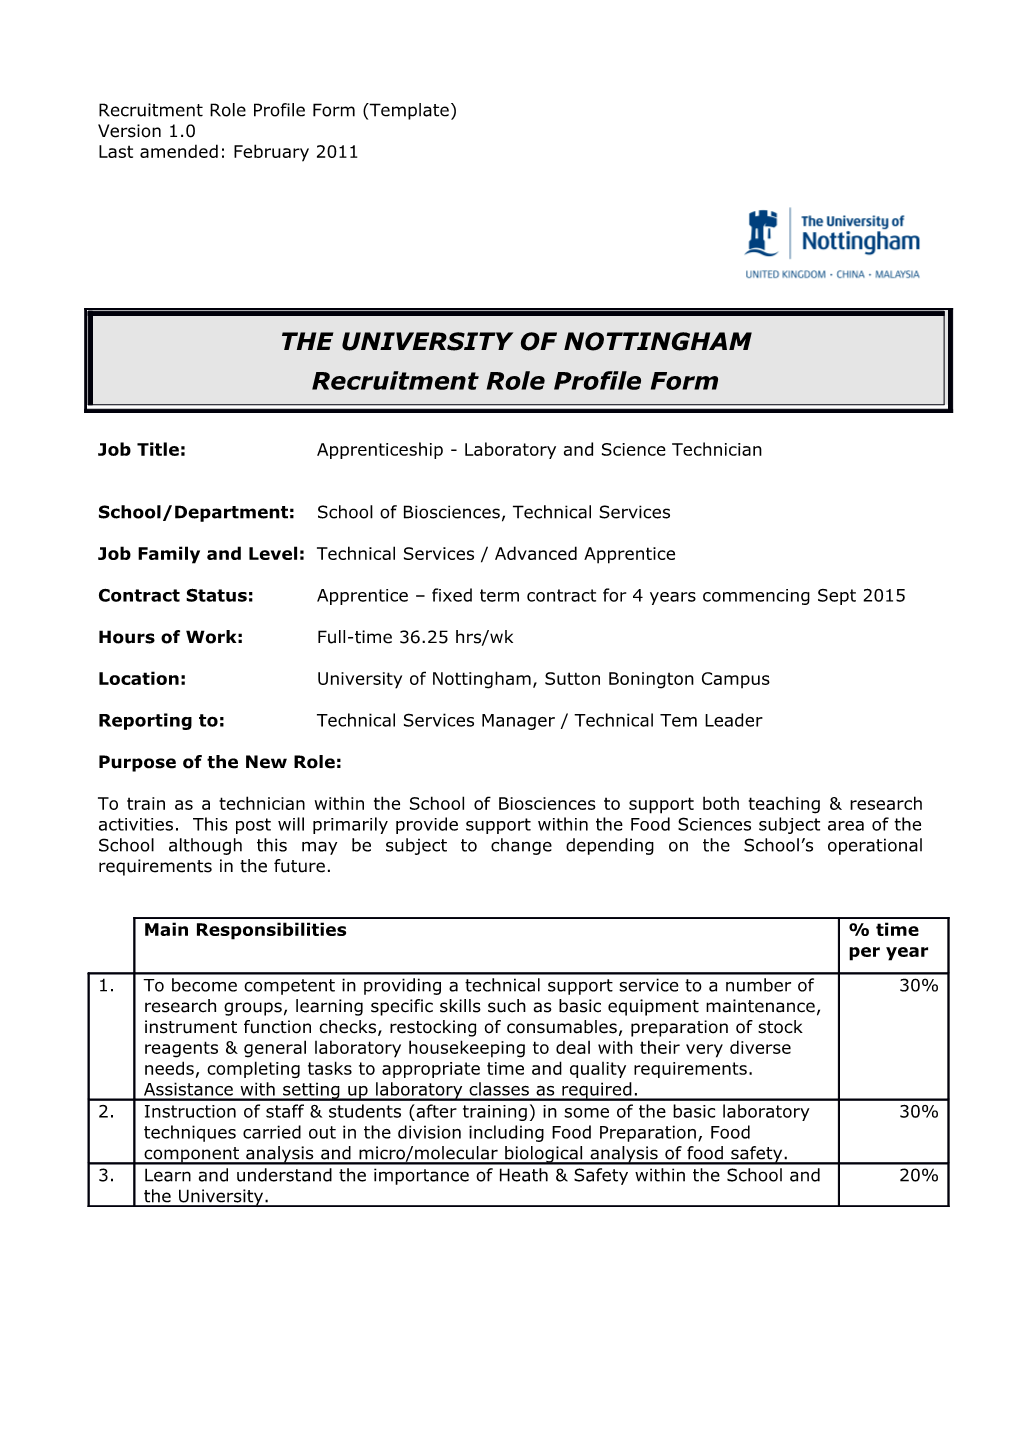 Job Title:Apprenticeship - Laboratory and Science Technician